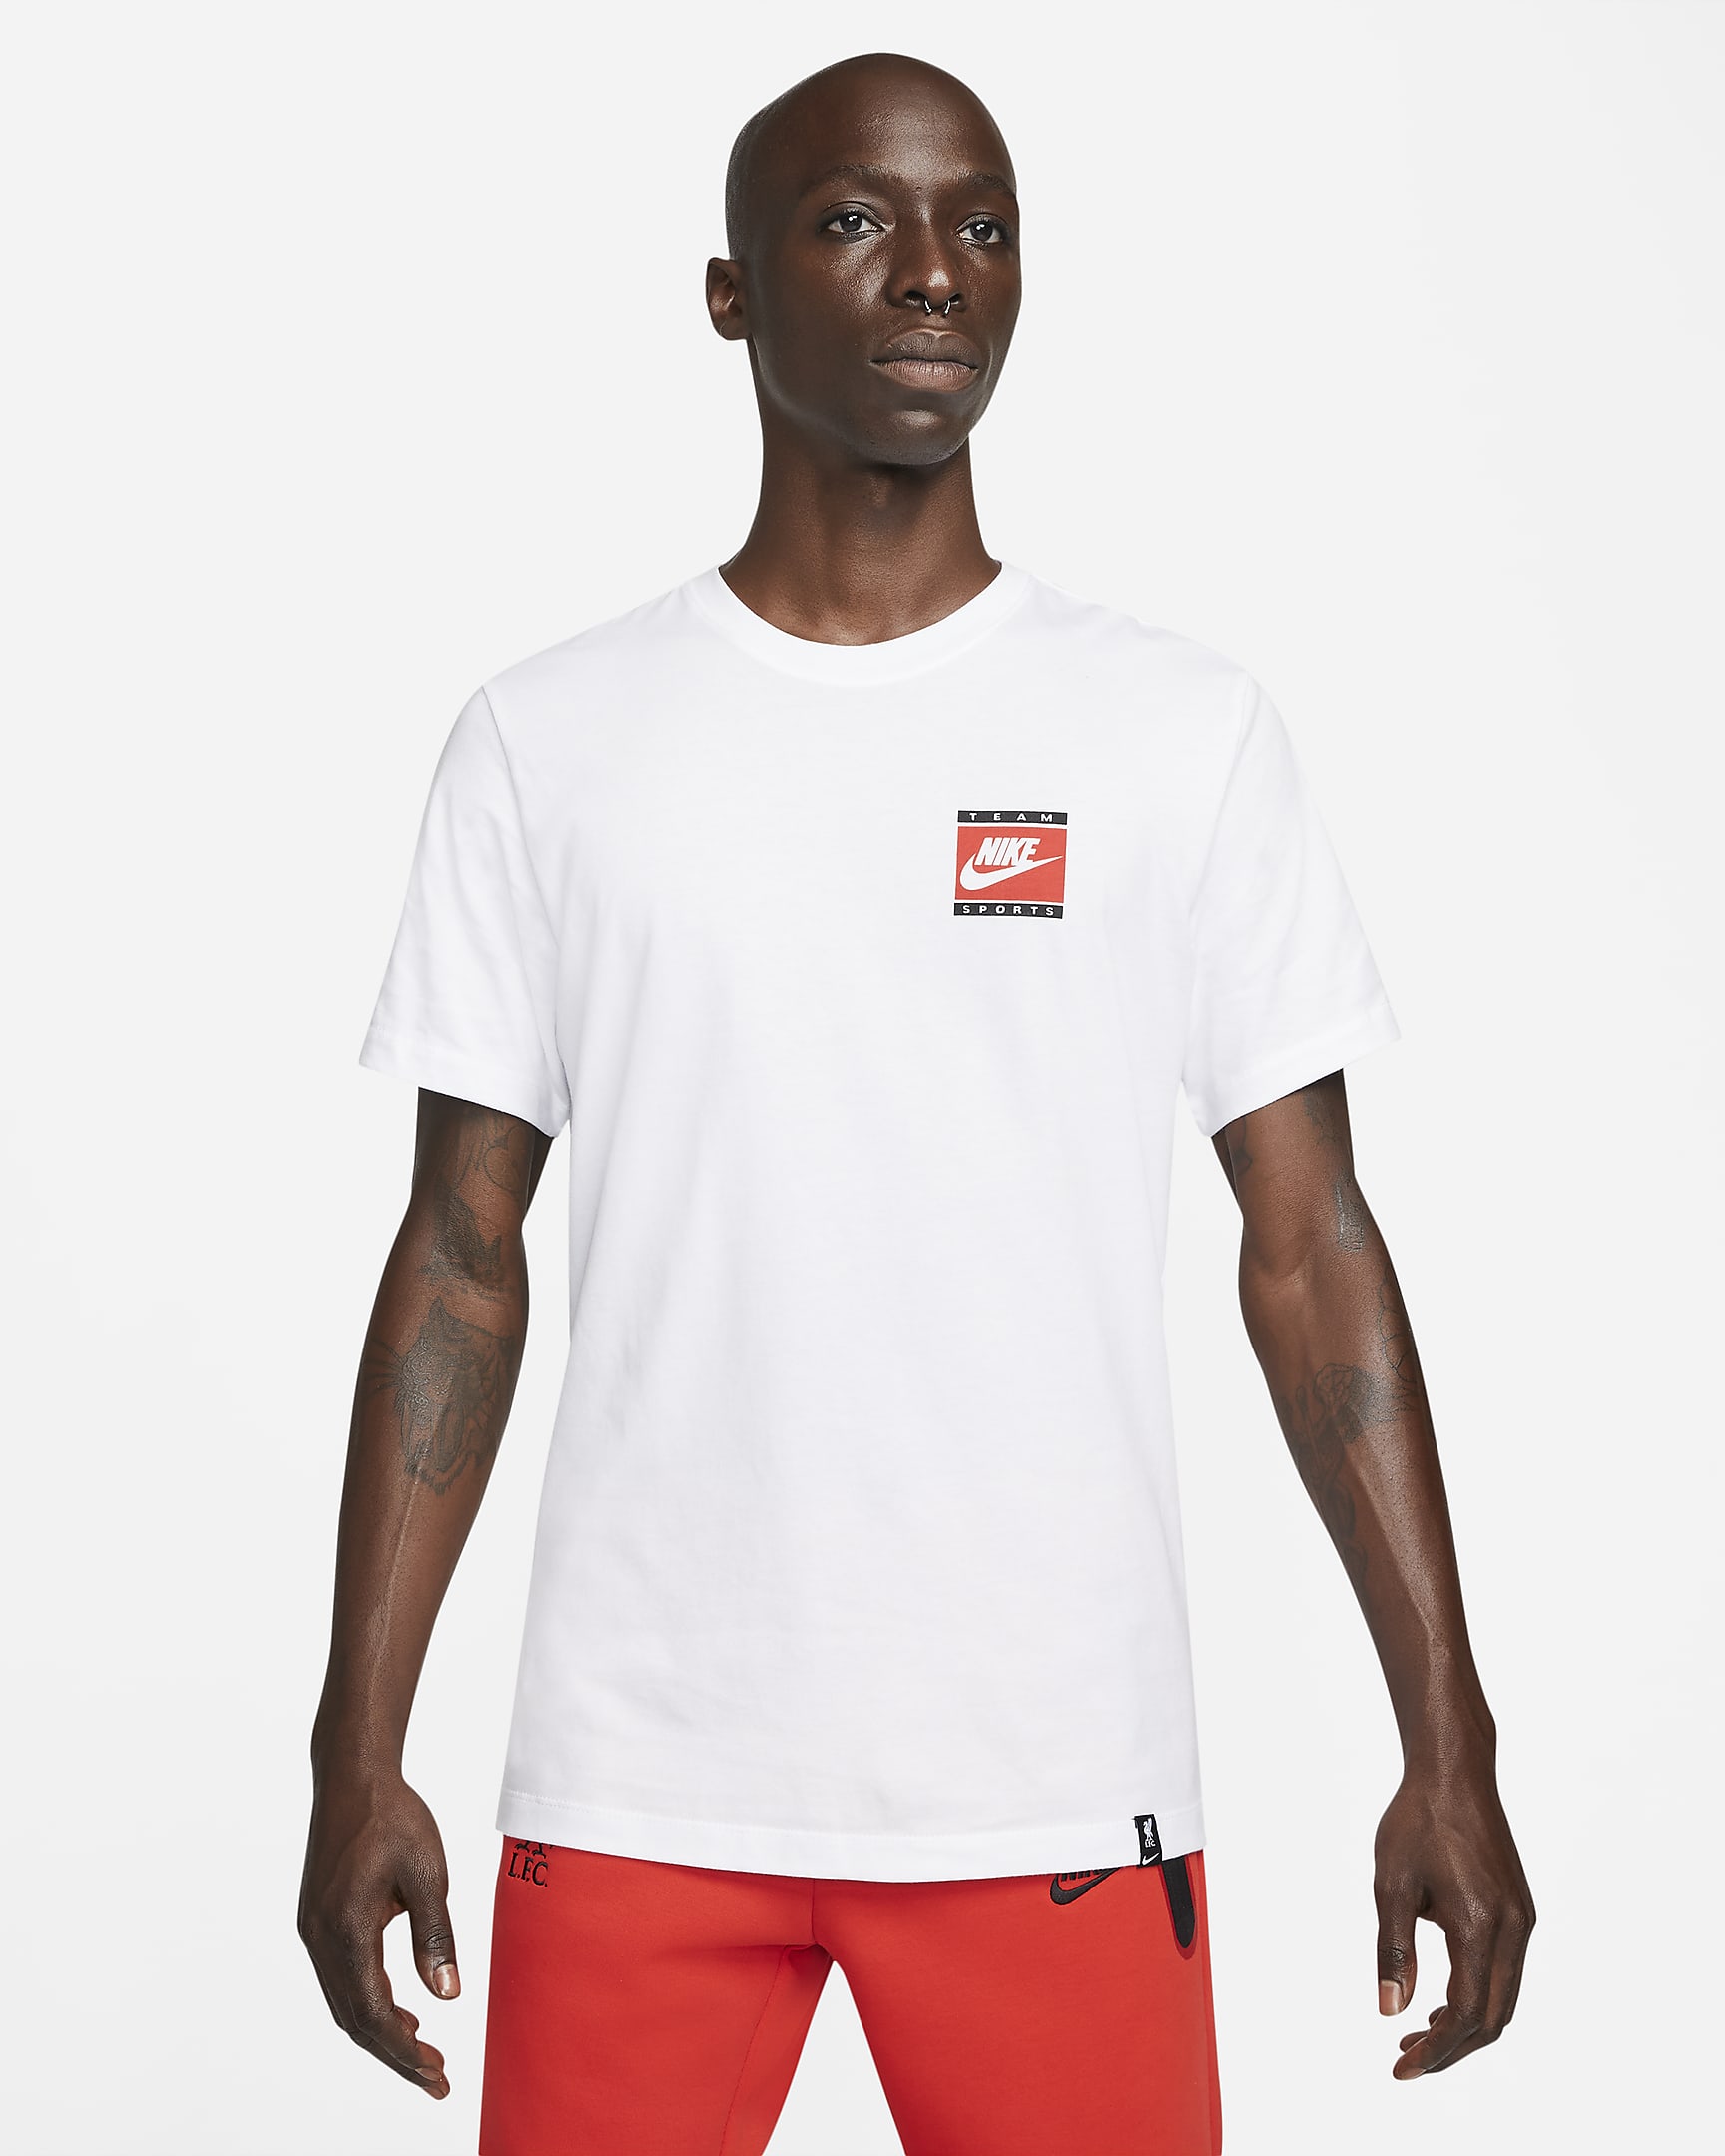 Nike Air Huarache Liverpool Shirts Hats Clothing Outfits